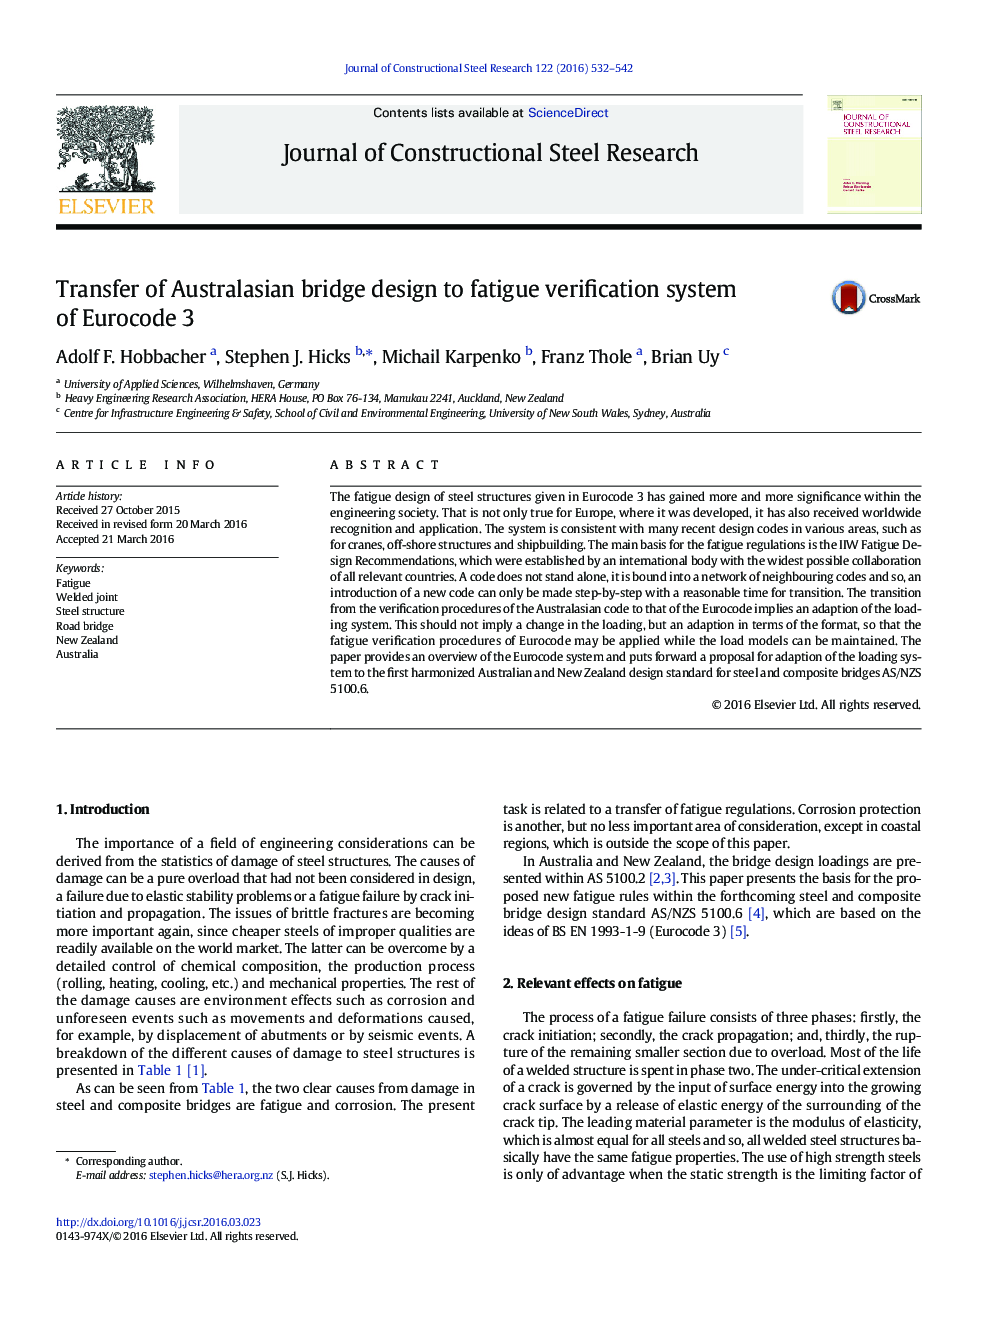 Transfer of Australasian bridge design to fatigue verification system of Eurocode 3